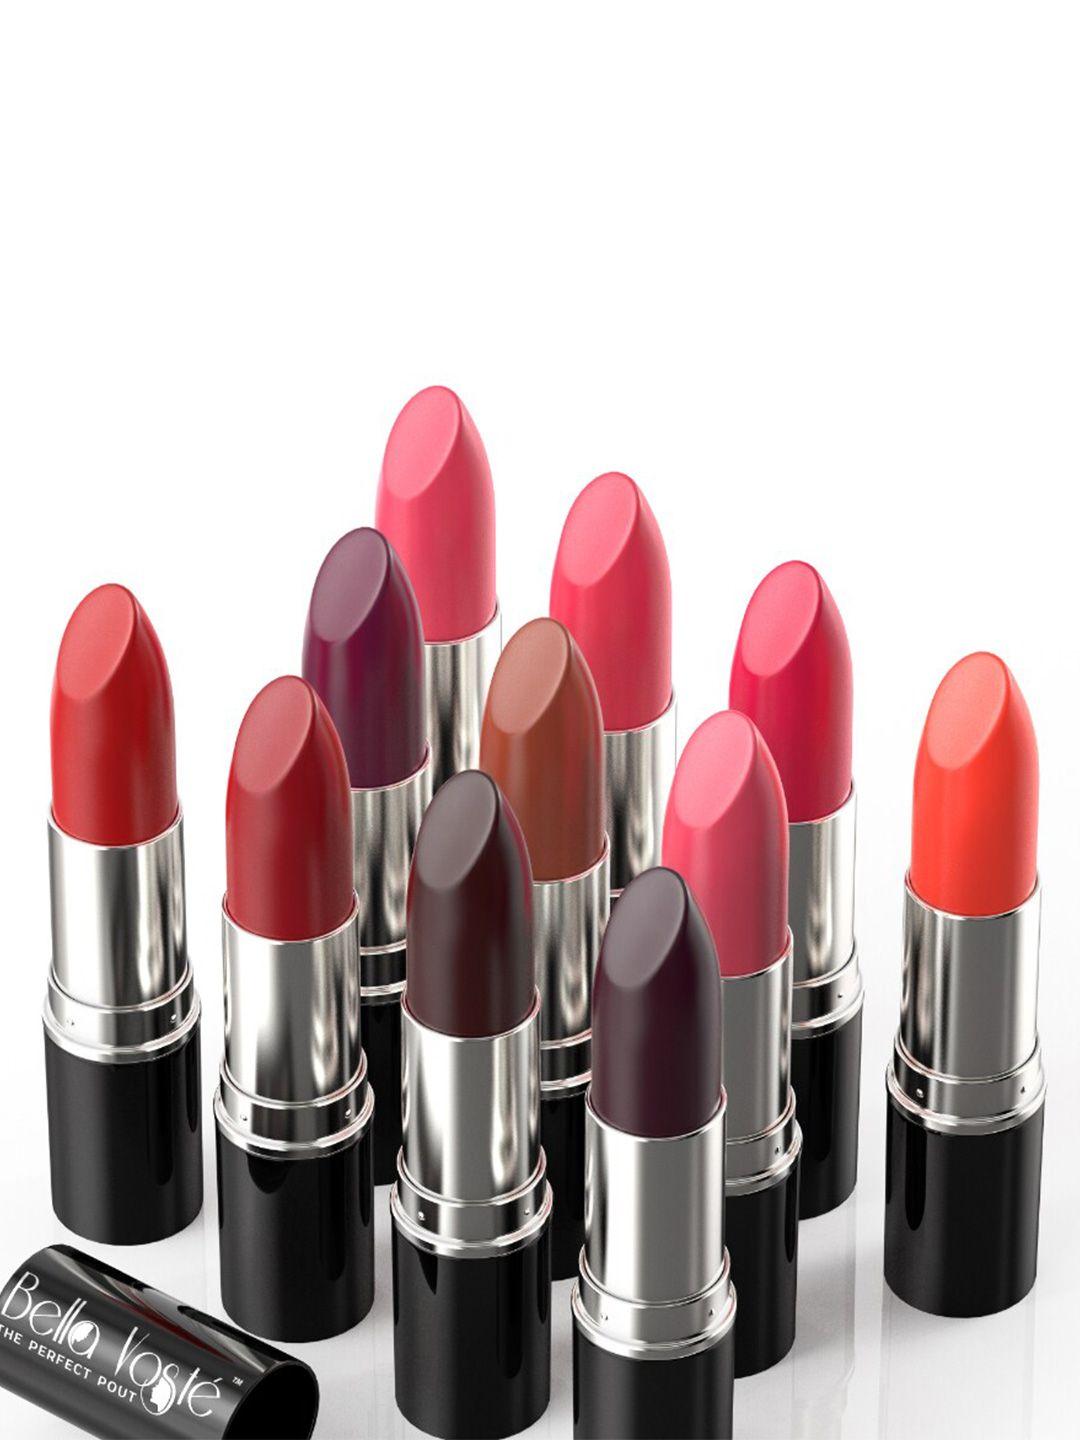 bella voste set of 11 professional moisturizing & long lasting matte lipsticks